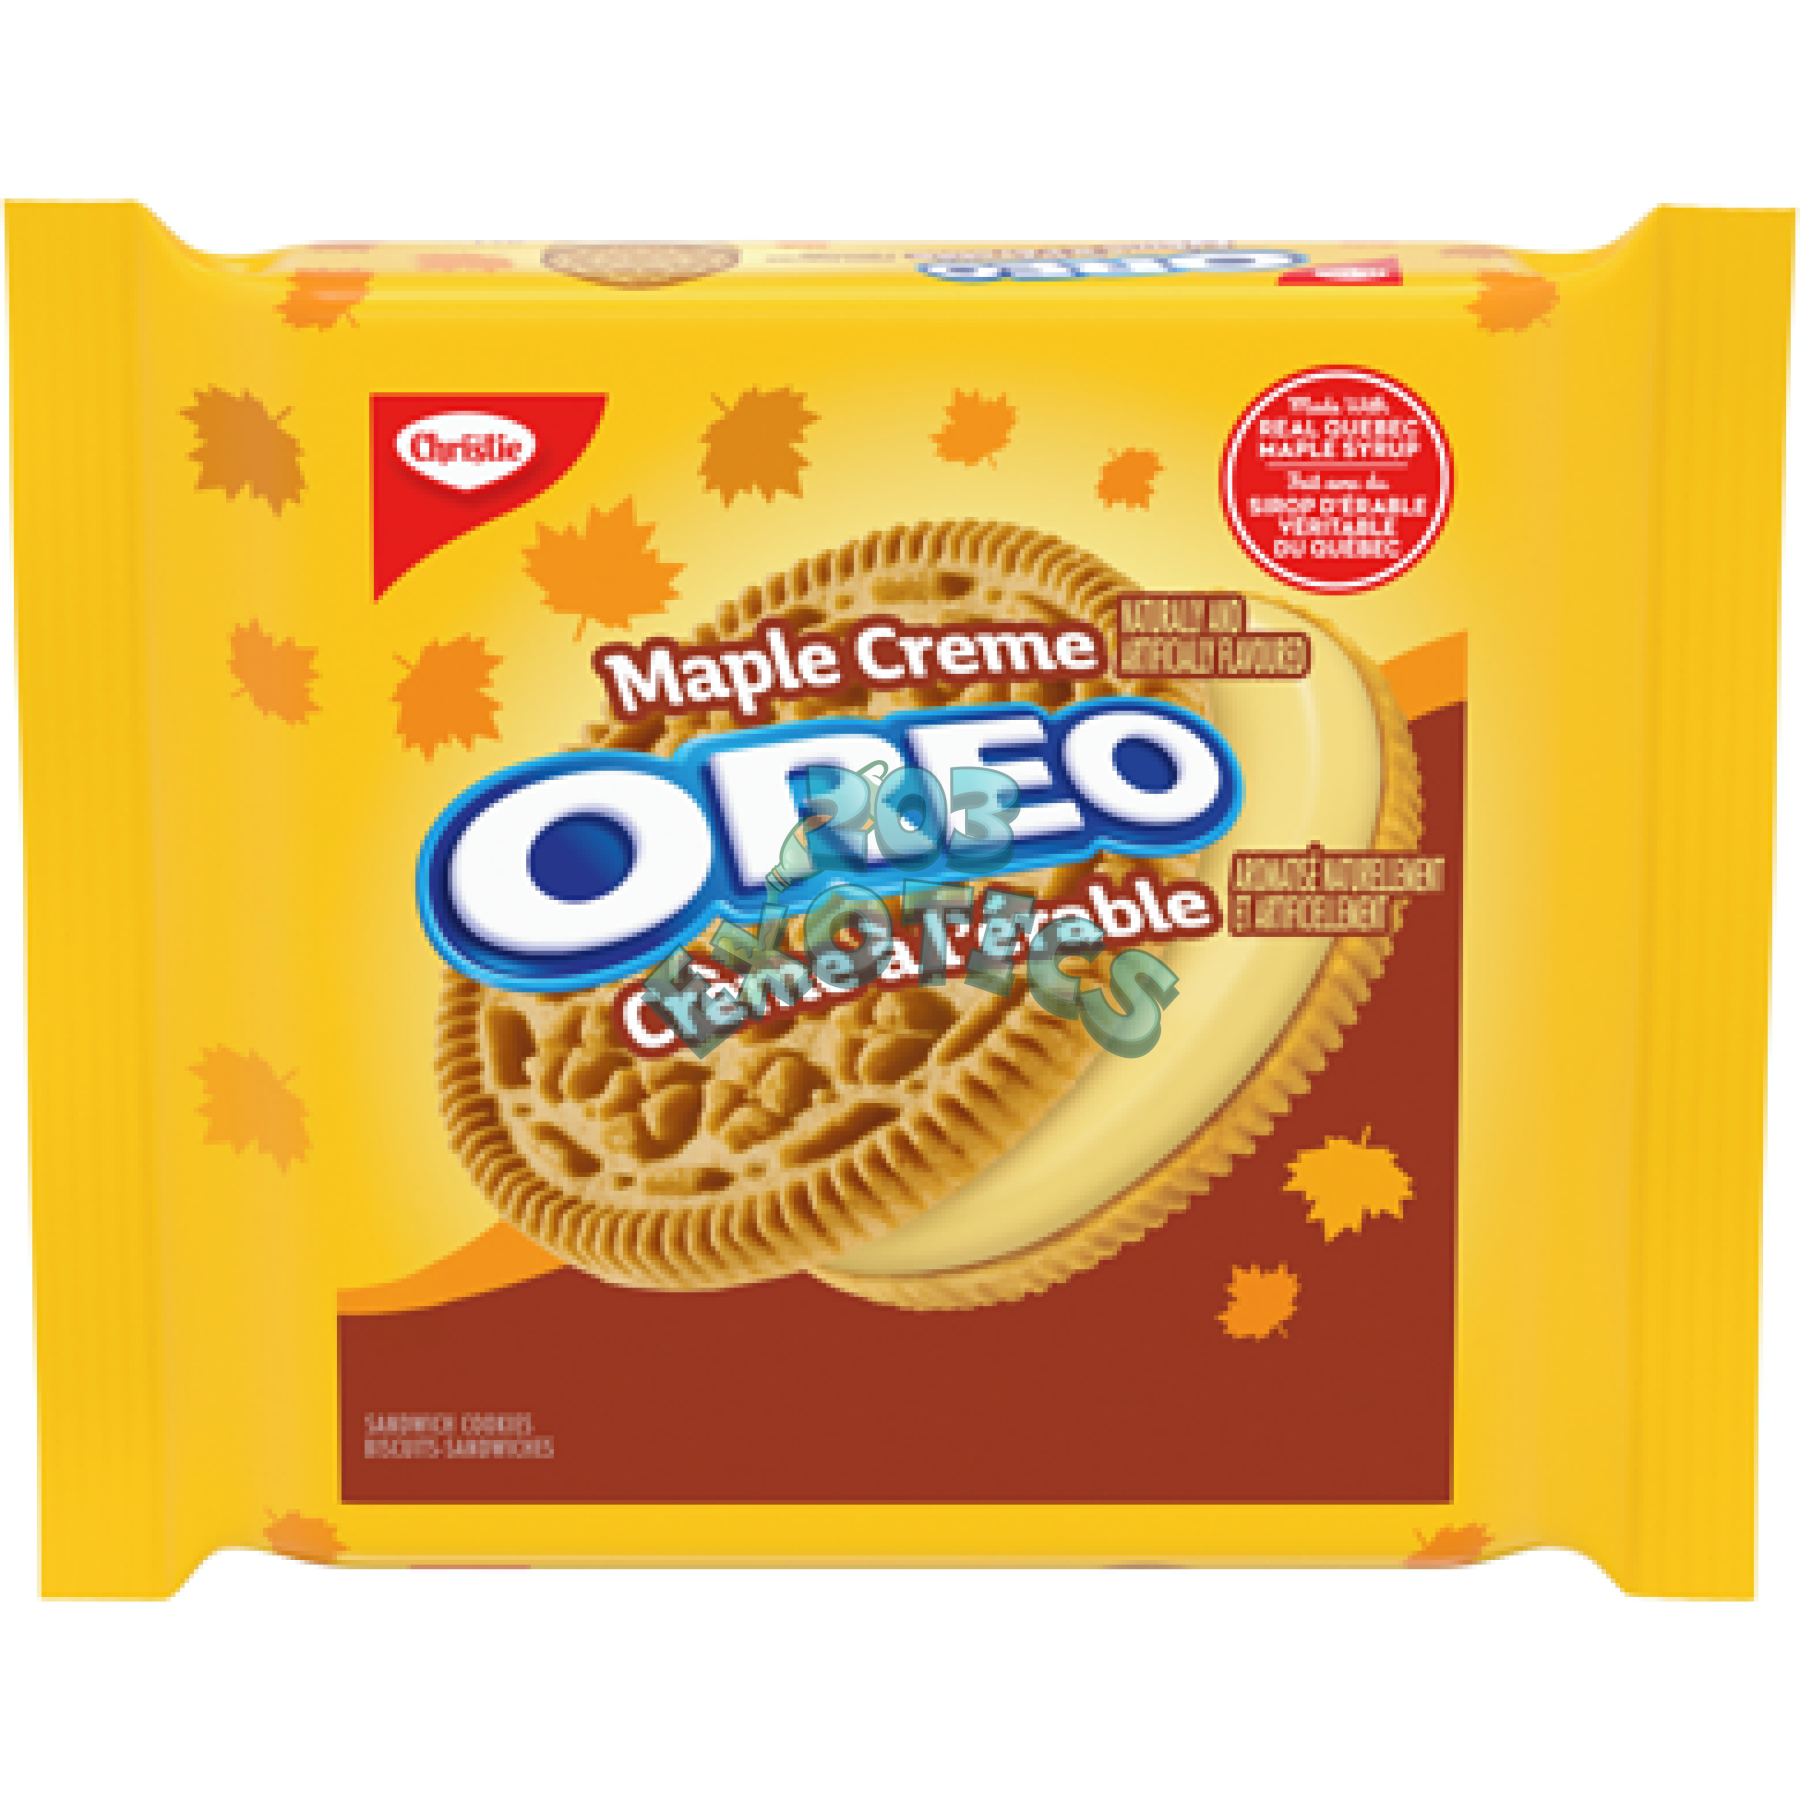 Oreo Maple Creme (261G) Brand New In Canada!!